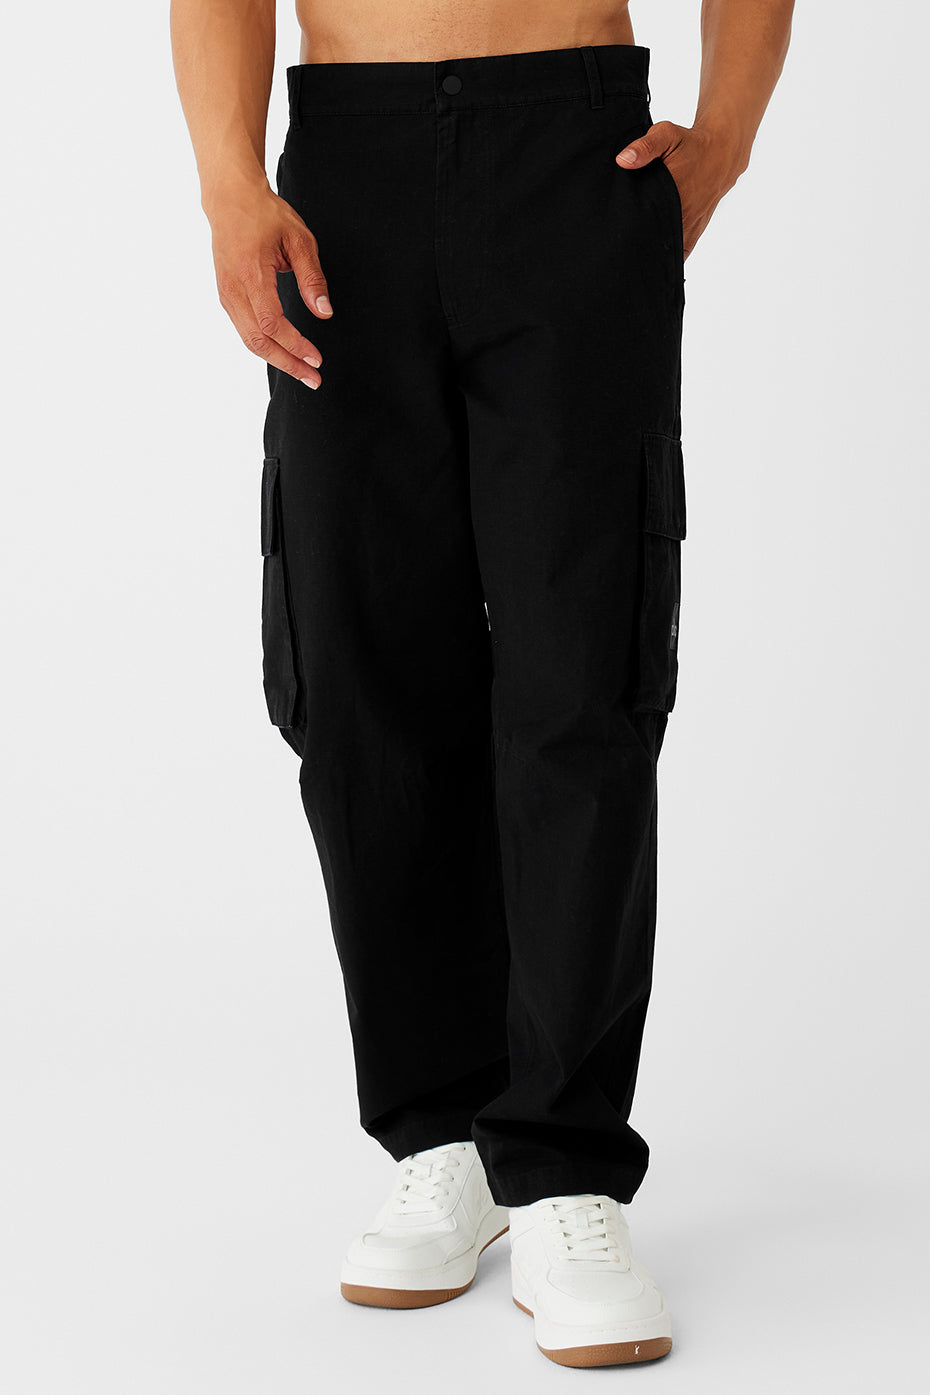 ALO Yoga Mens CO-OP Pant Black Size Large